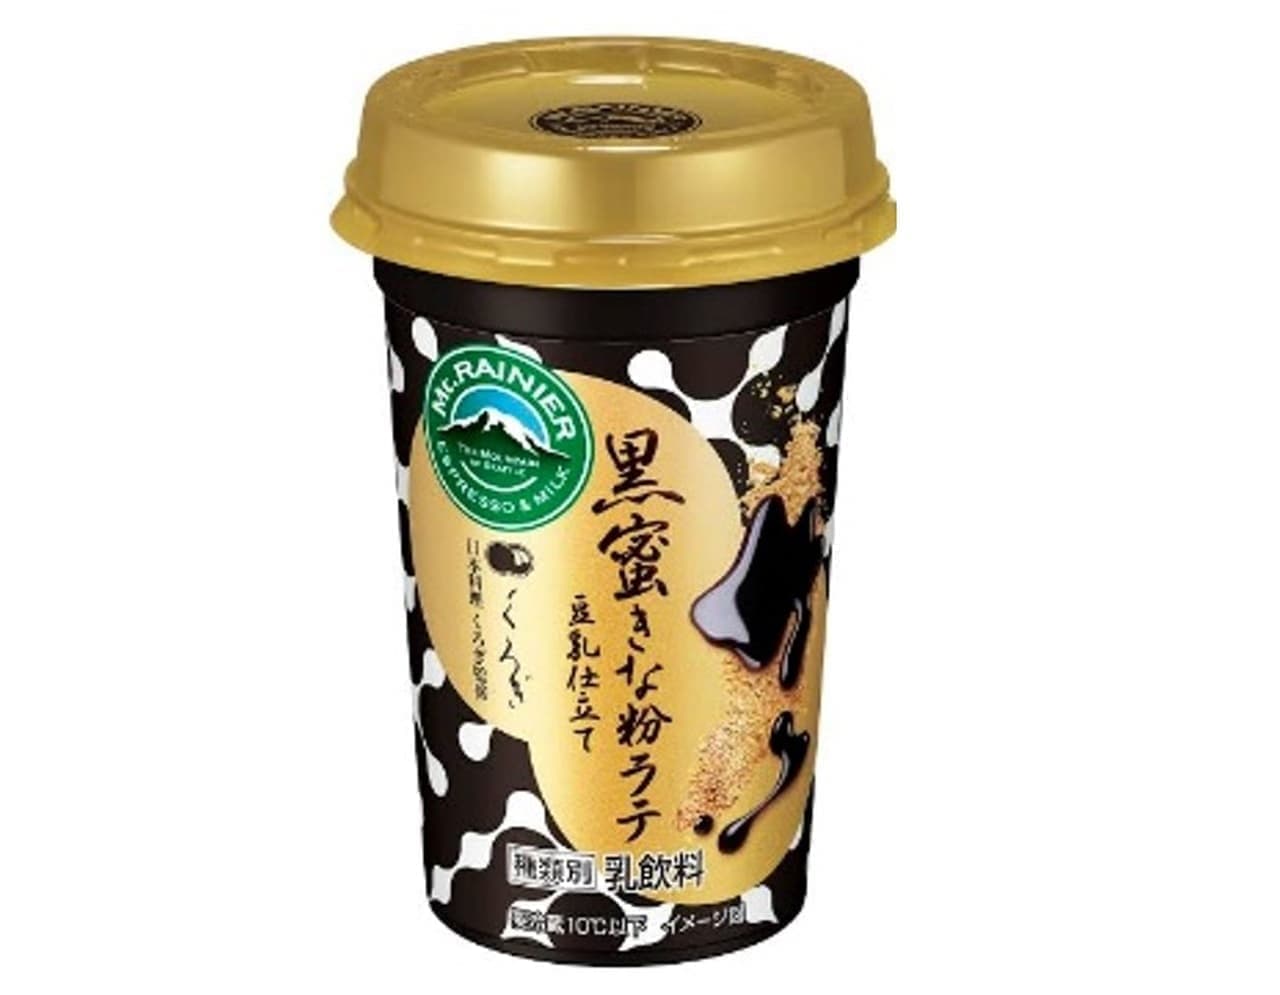 Limited time offer "Mount Rainier Kuromitsu Kinako Latte"